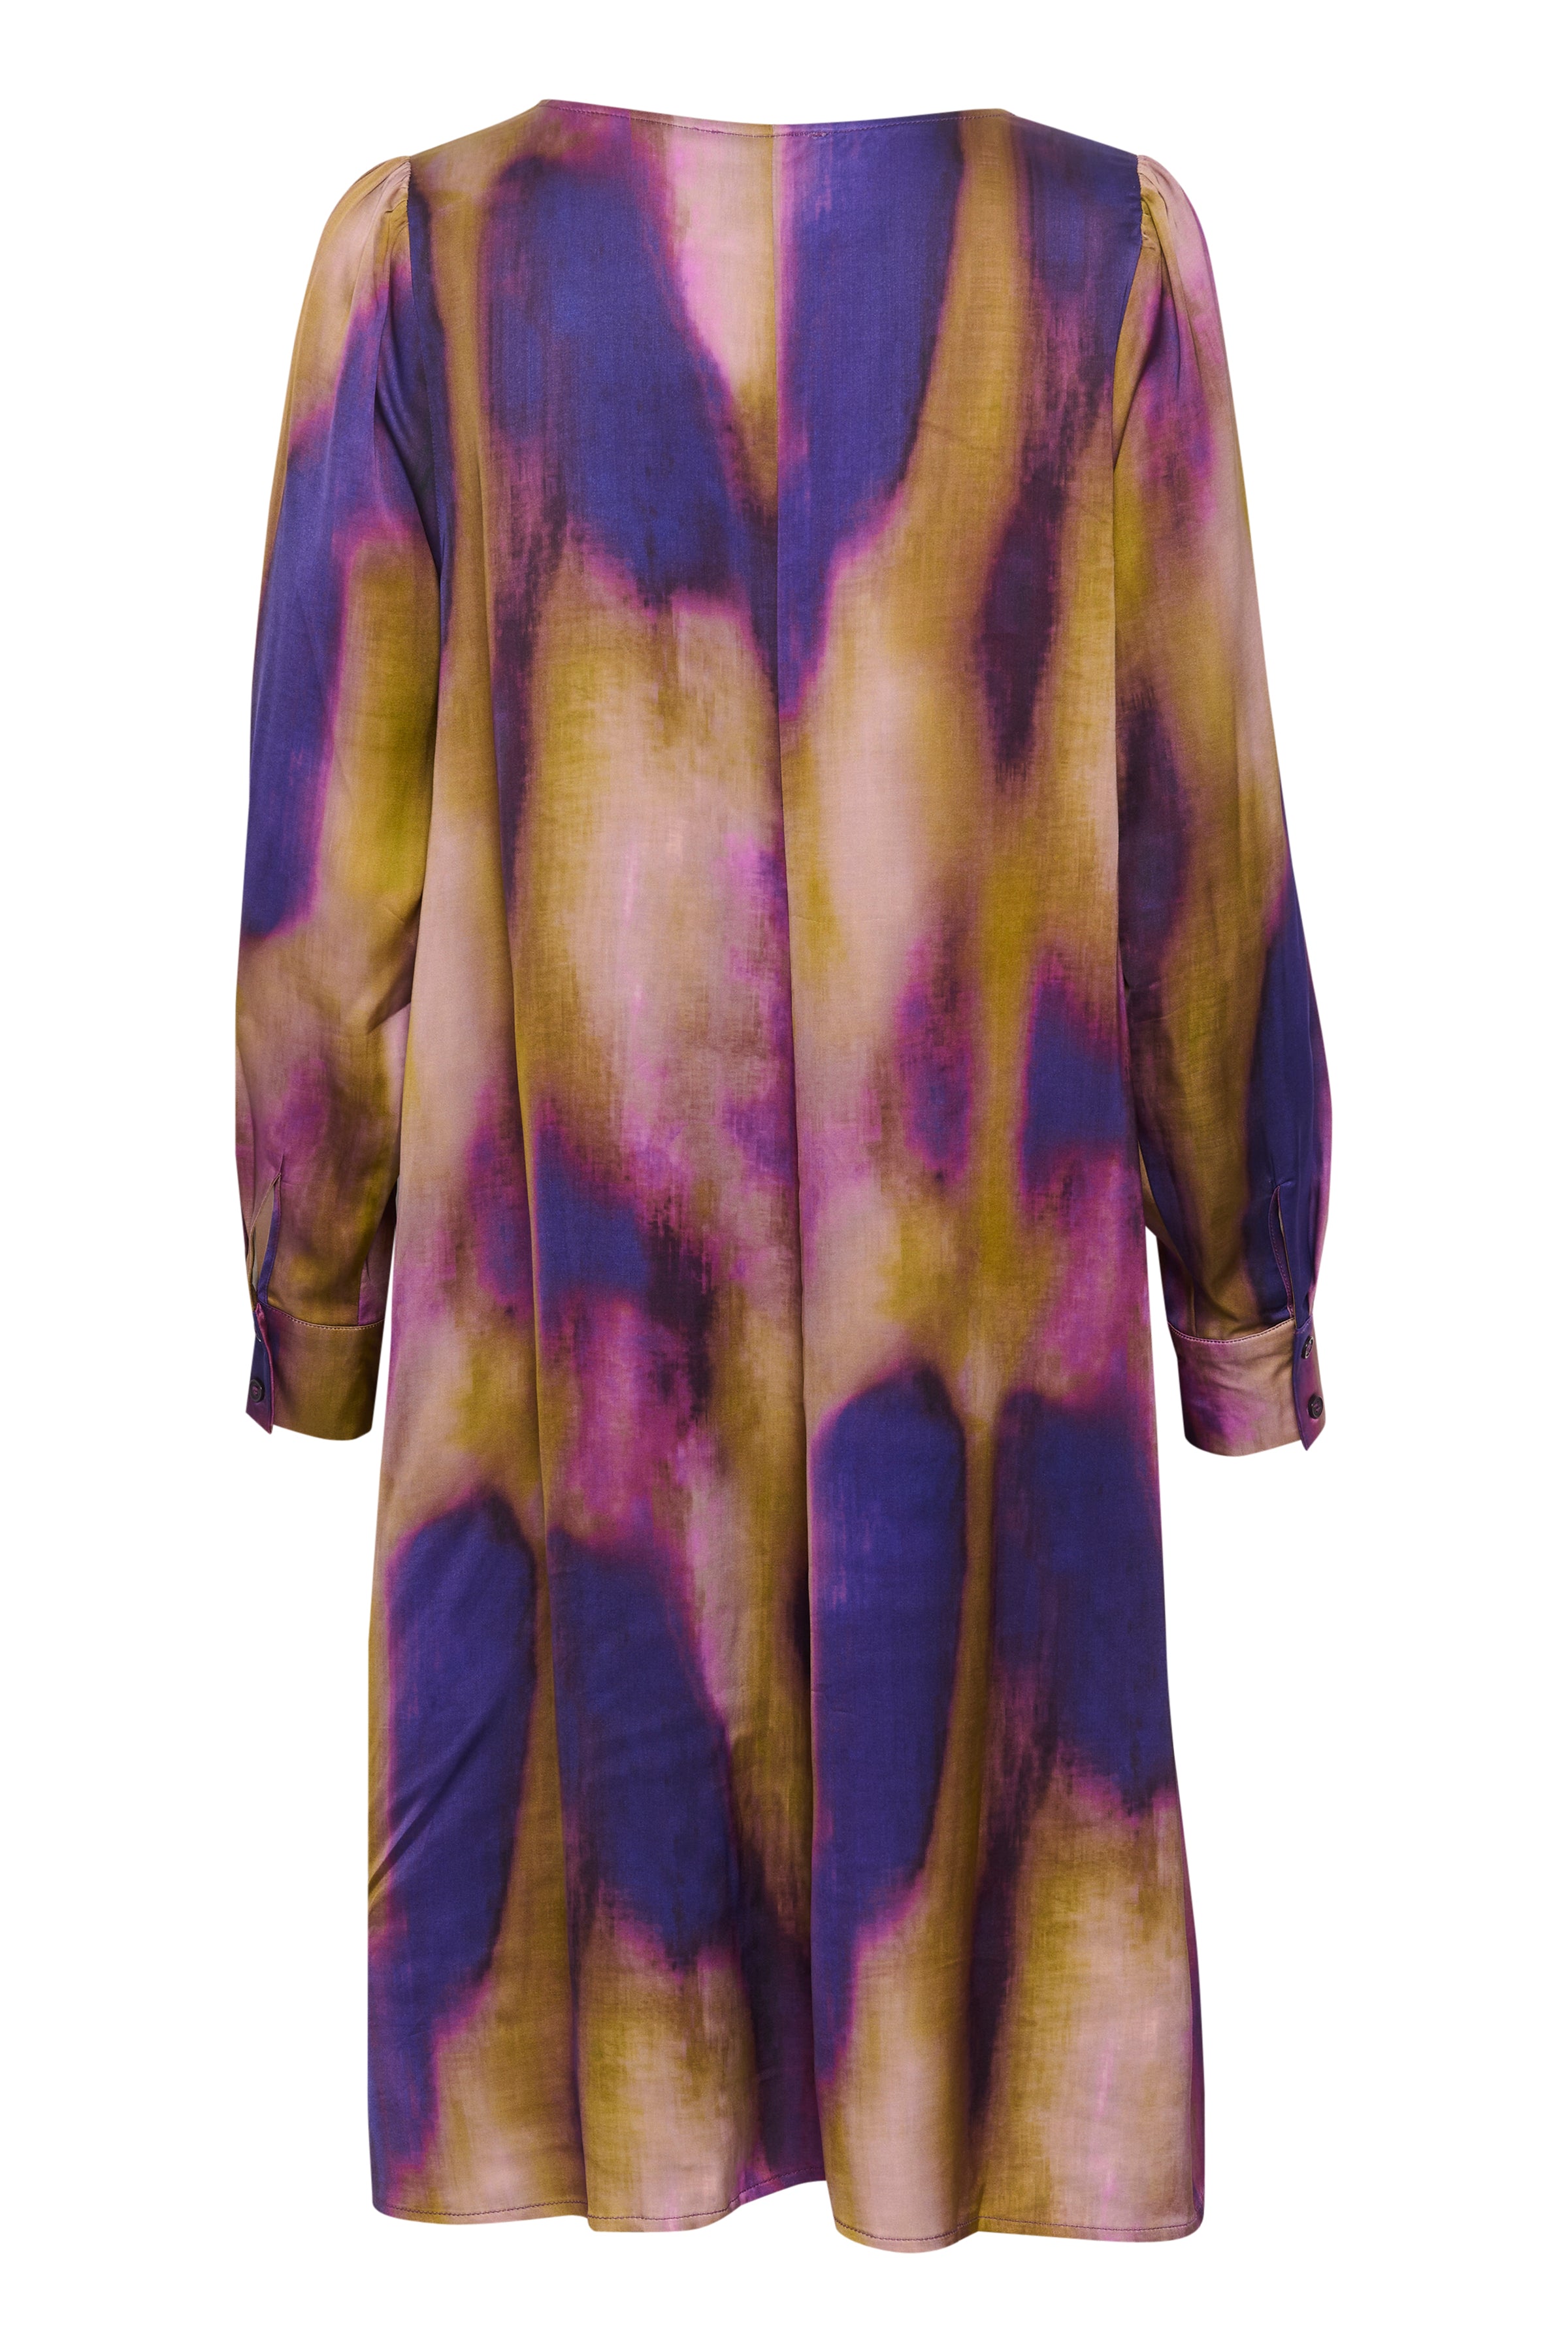 My Essential Wardrobe TamaraMW Dress, Purple